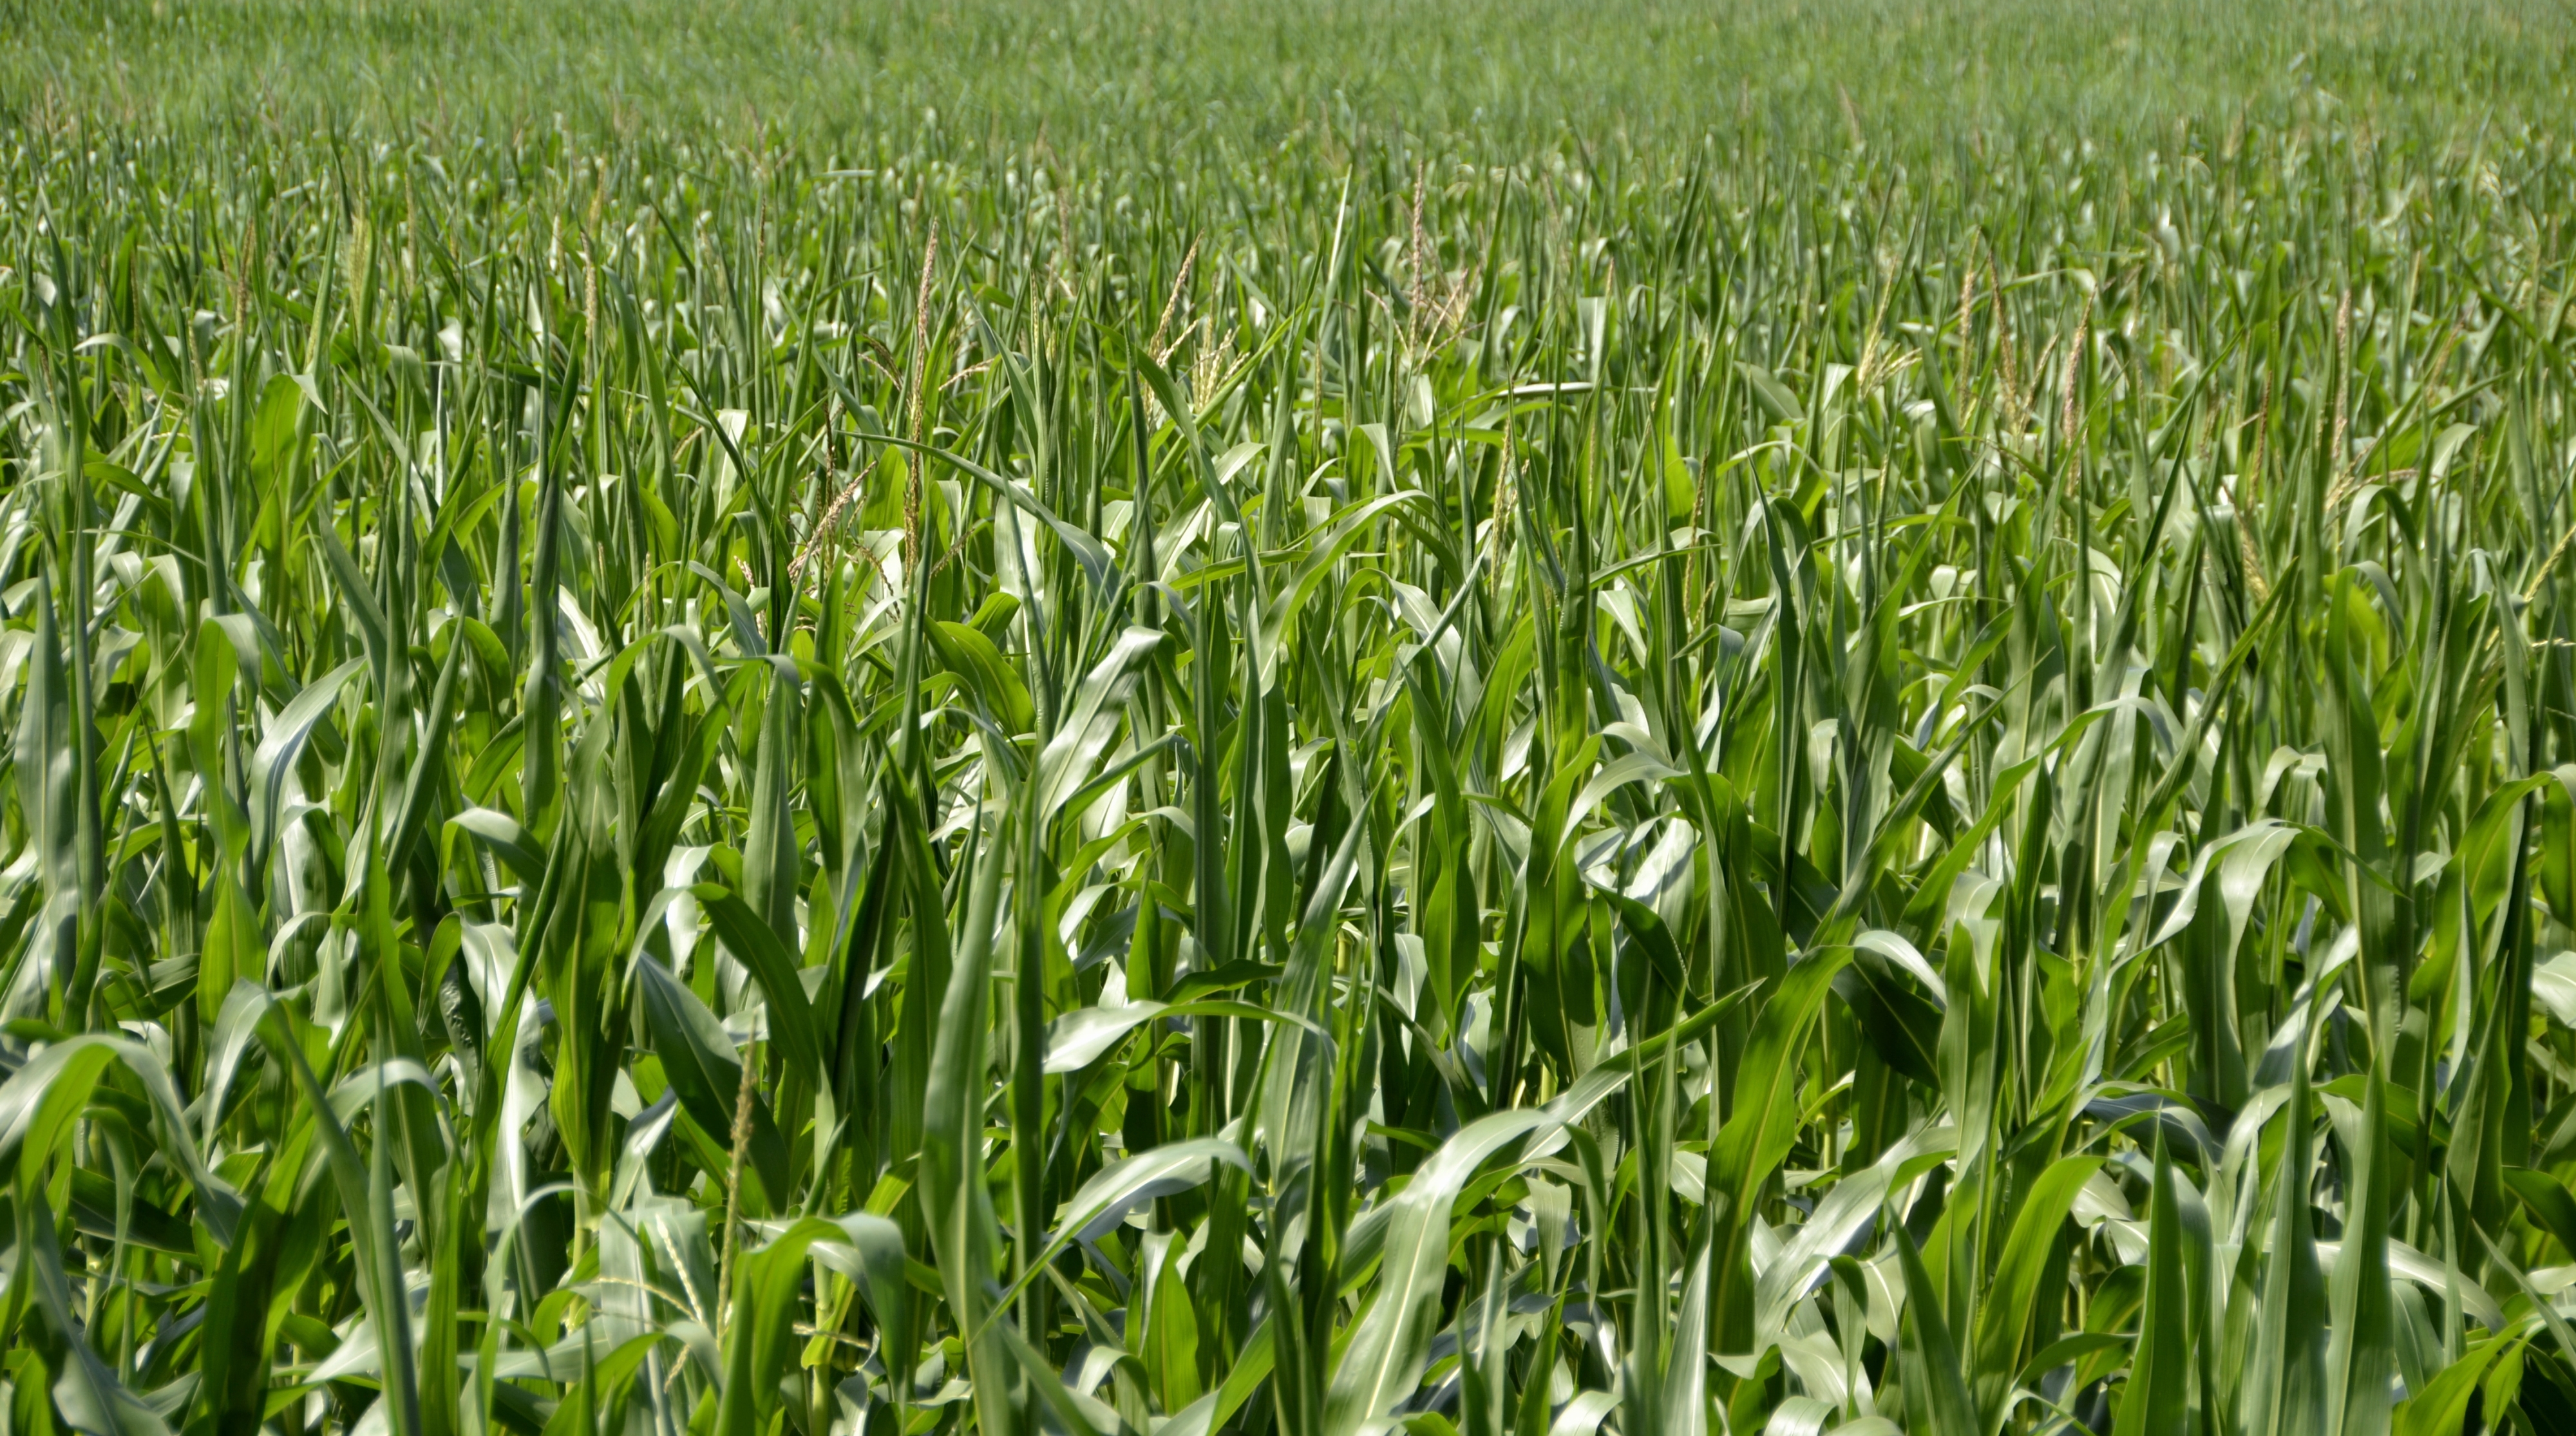 Maize field in Bavaria in Summer 2013